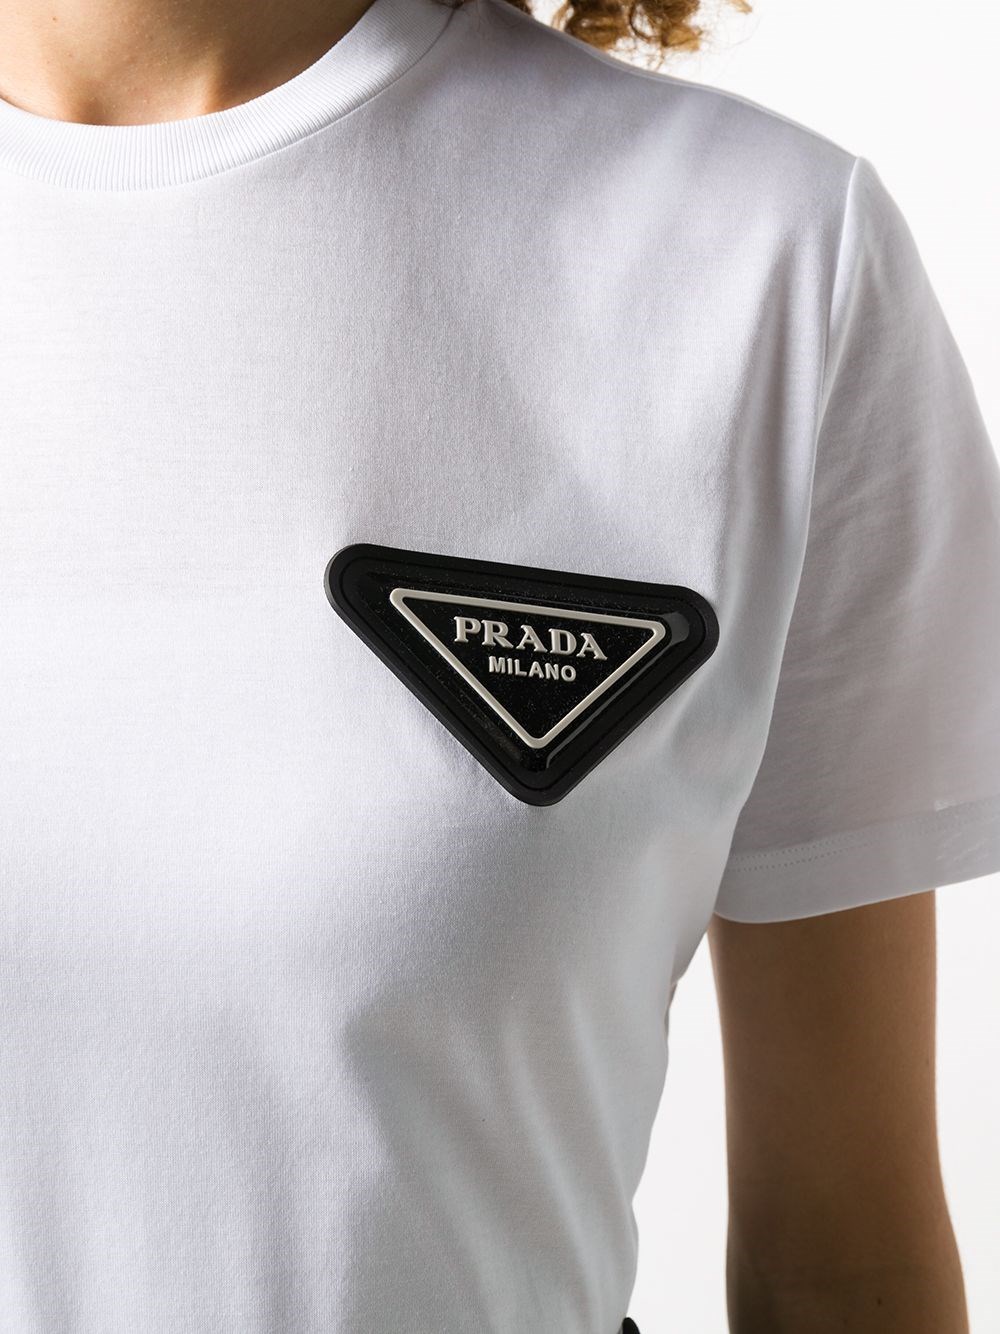 prada t shirt logo Off 65% - www.gmcanantnag.net